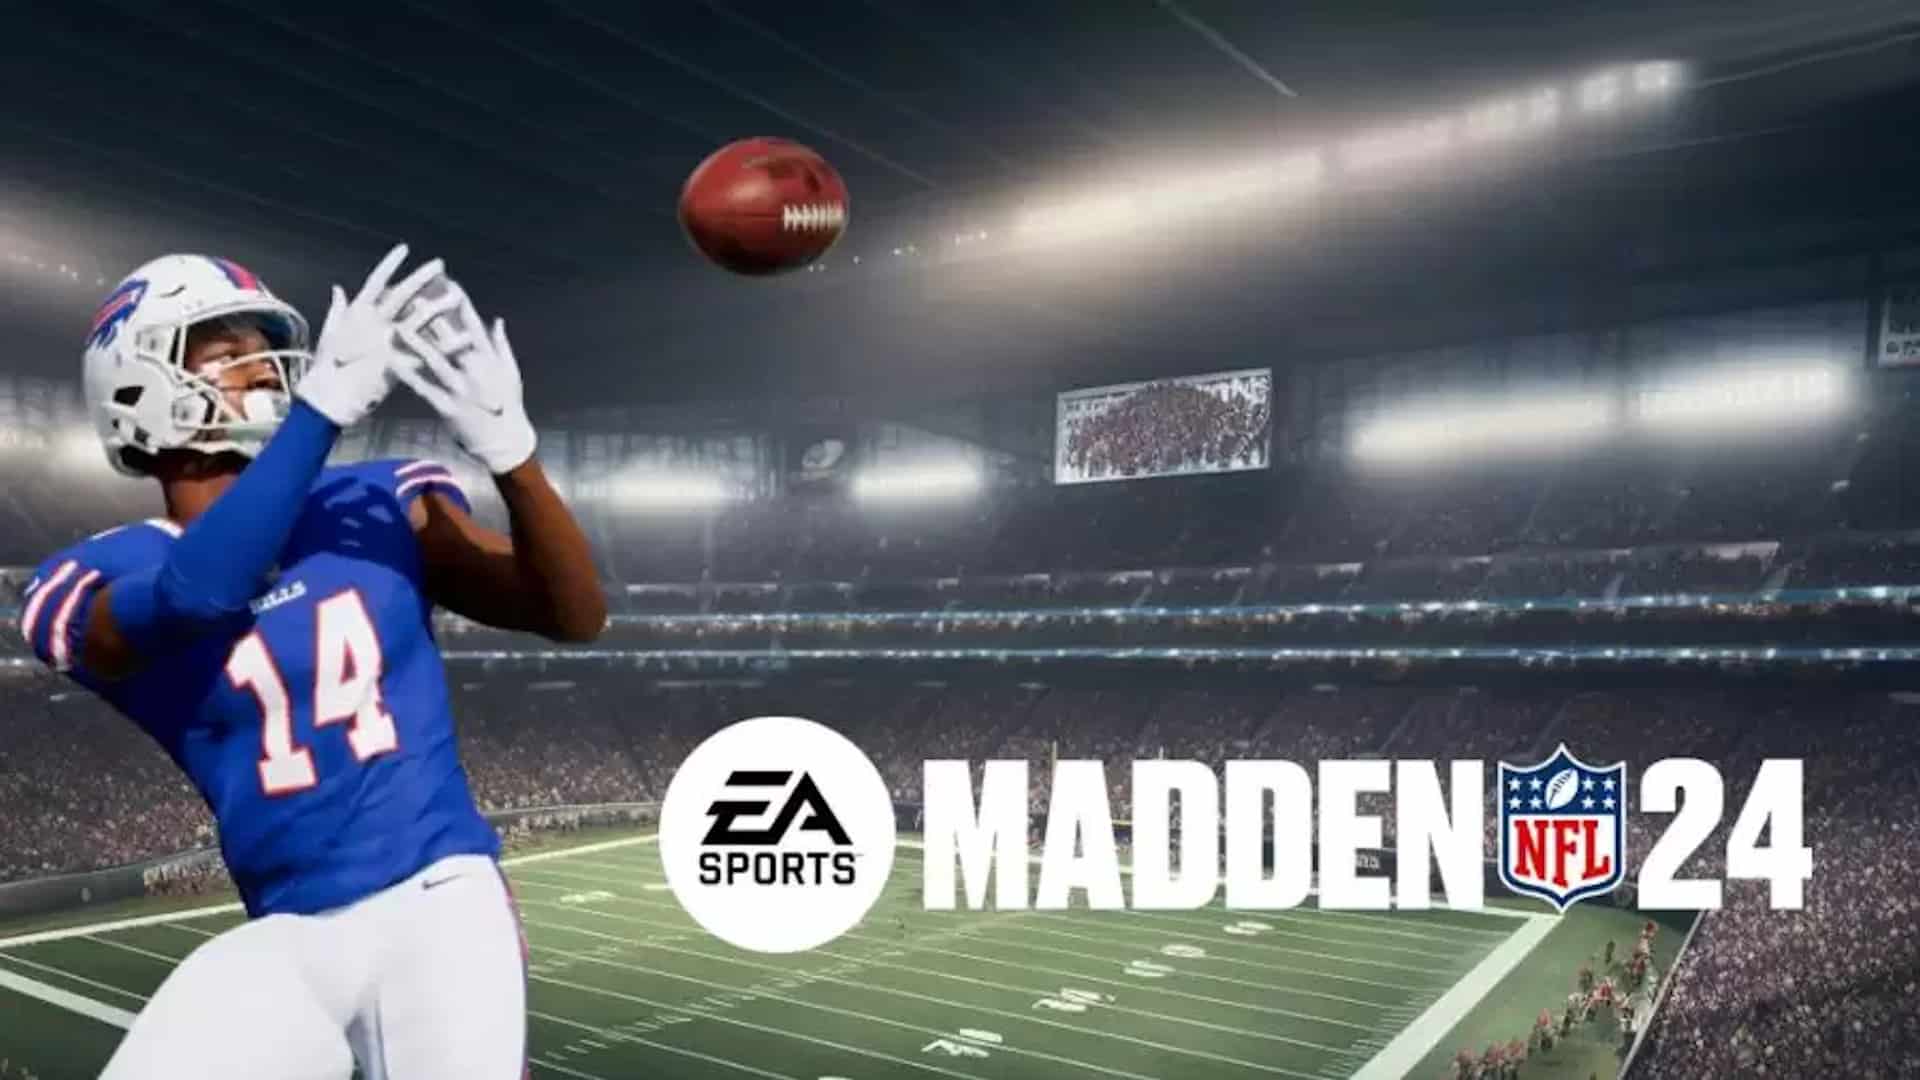 Madden NFL 24 game release